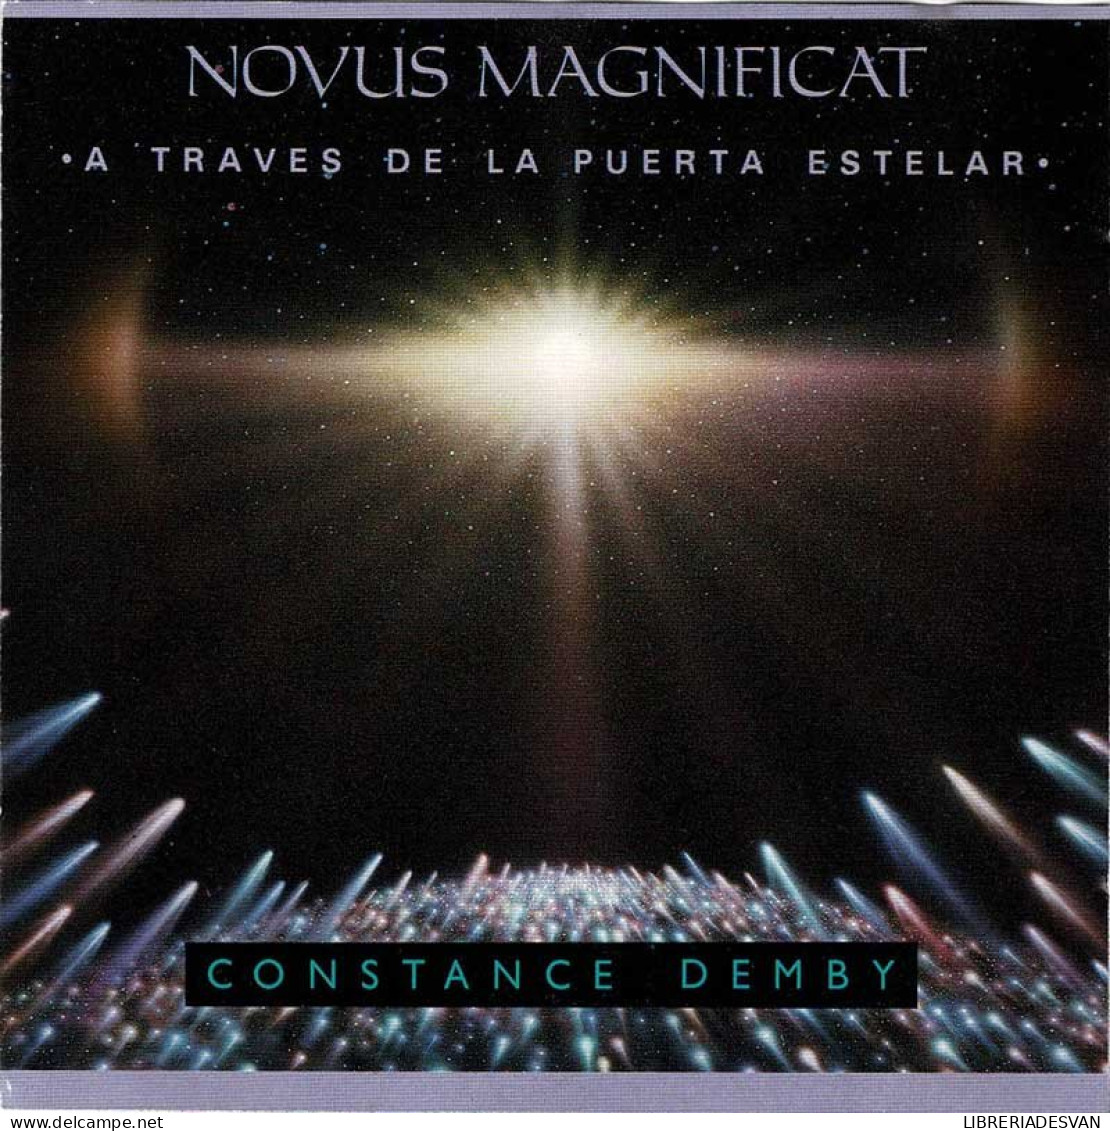 Constance Demby - Novus Magnificat: Through The Stargate. CD - Nueva Era (New Age)